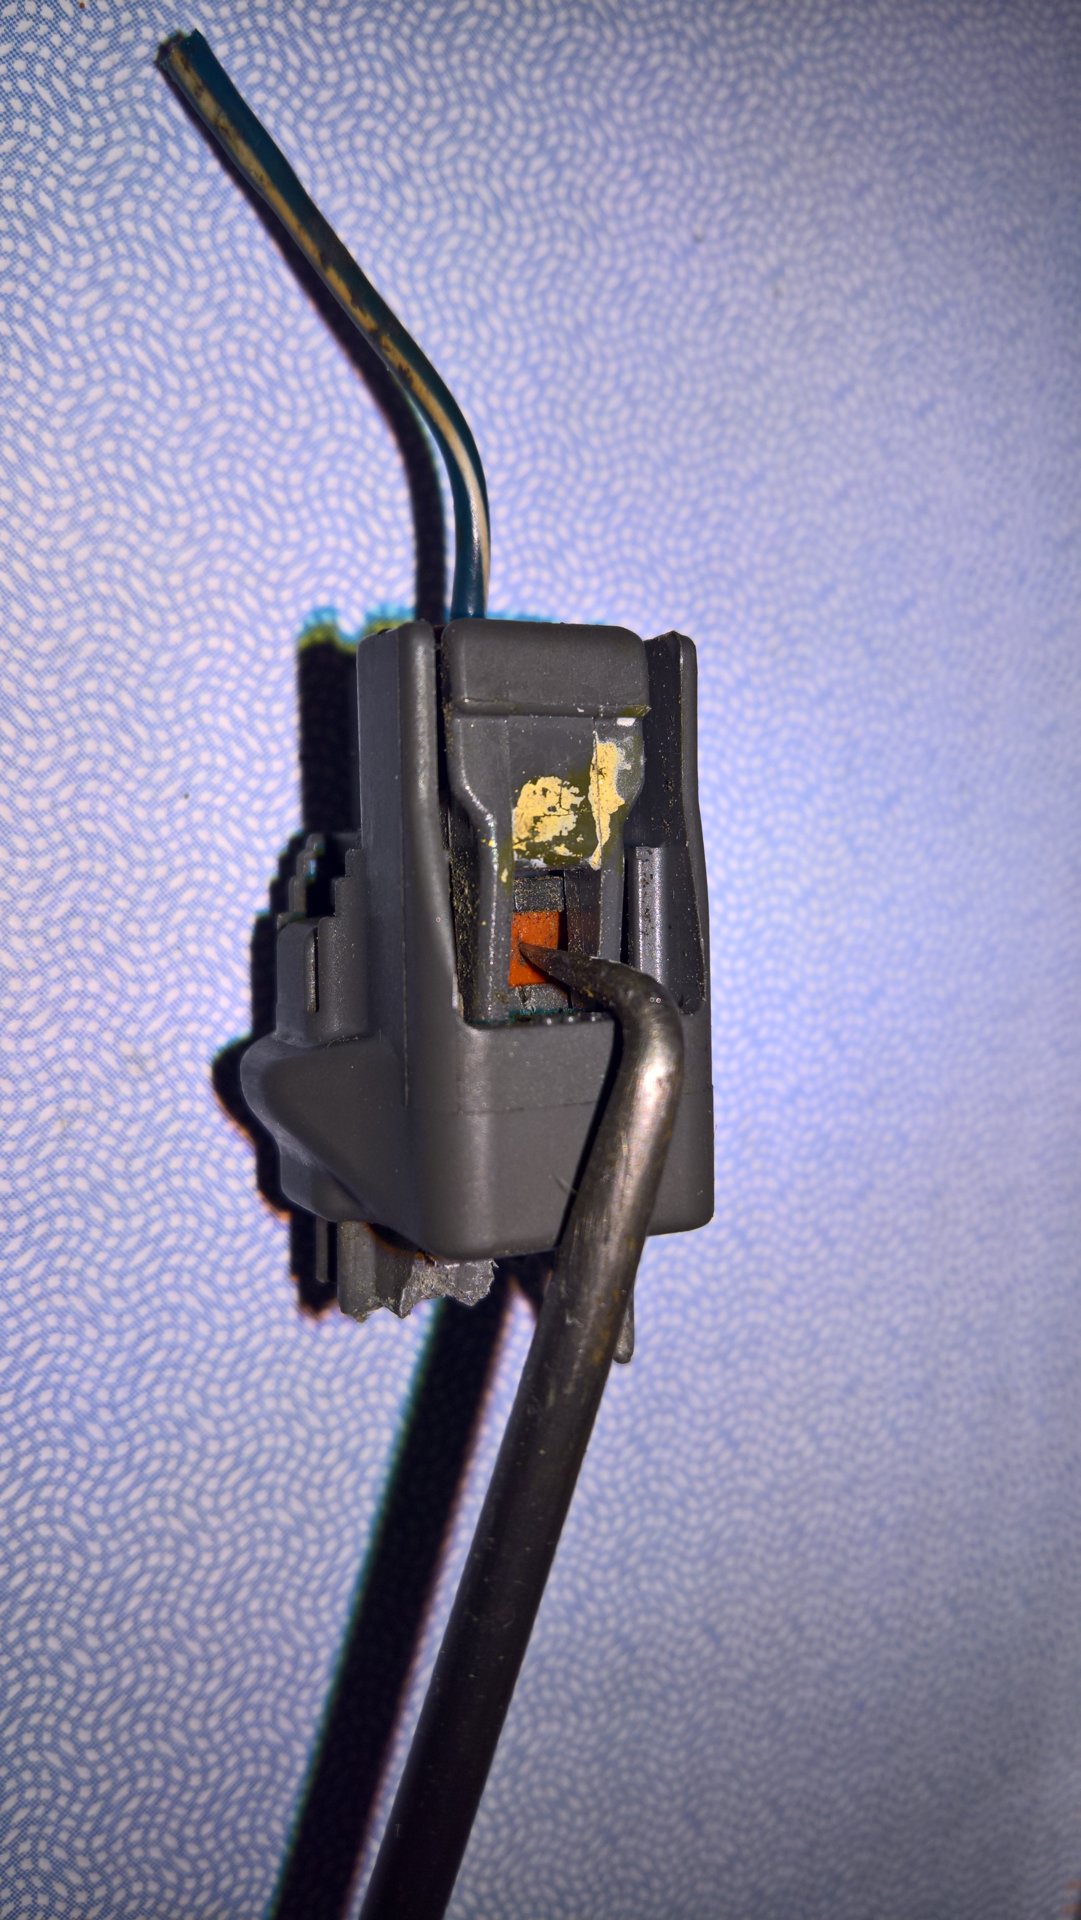 Knock sensor harness connector with pick.jpg